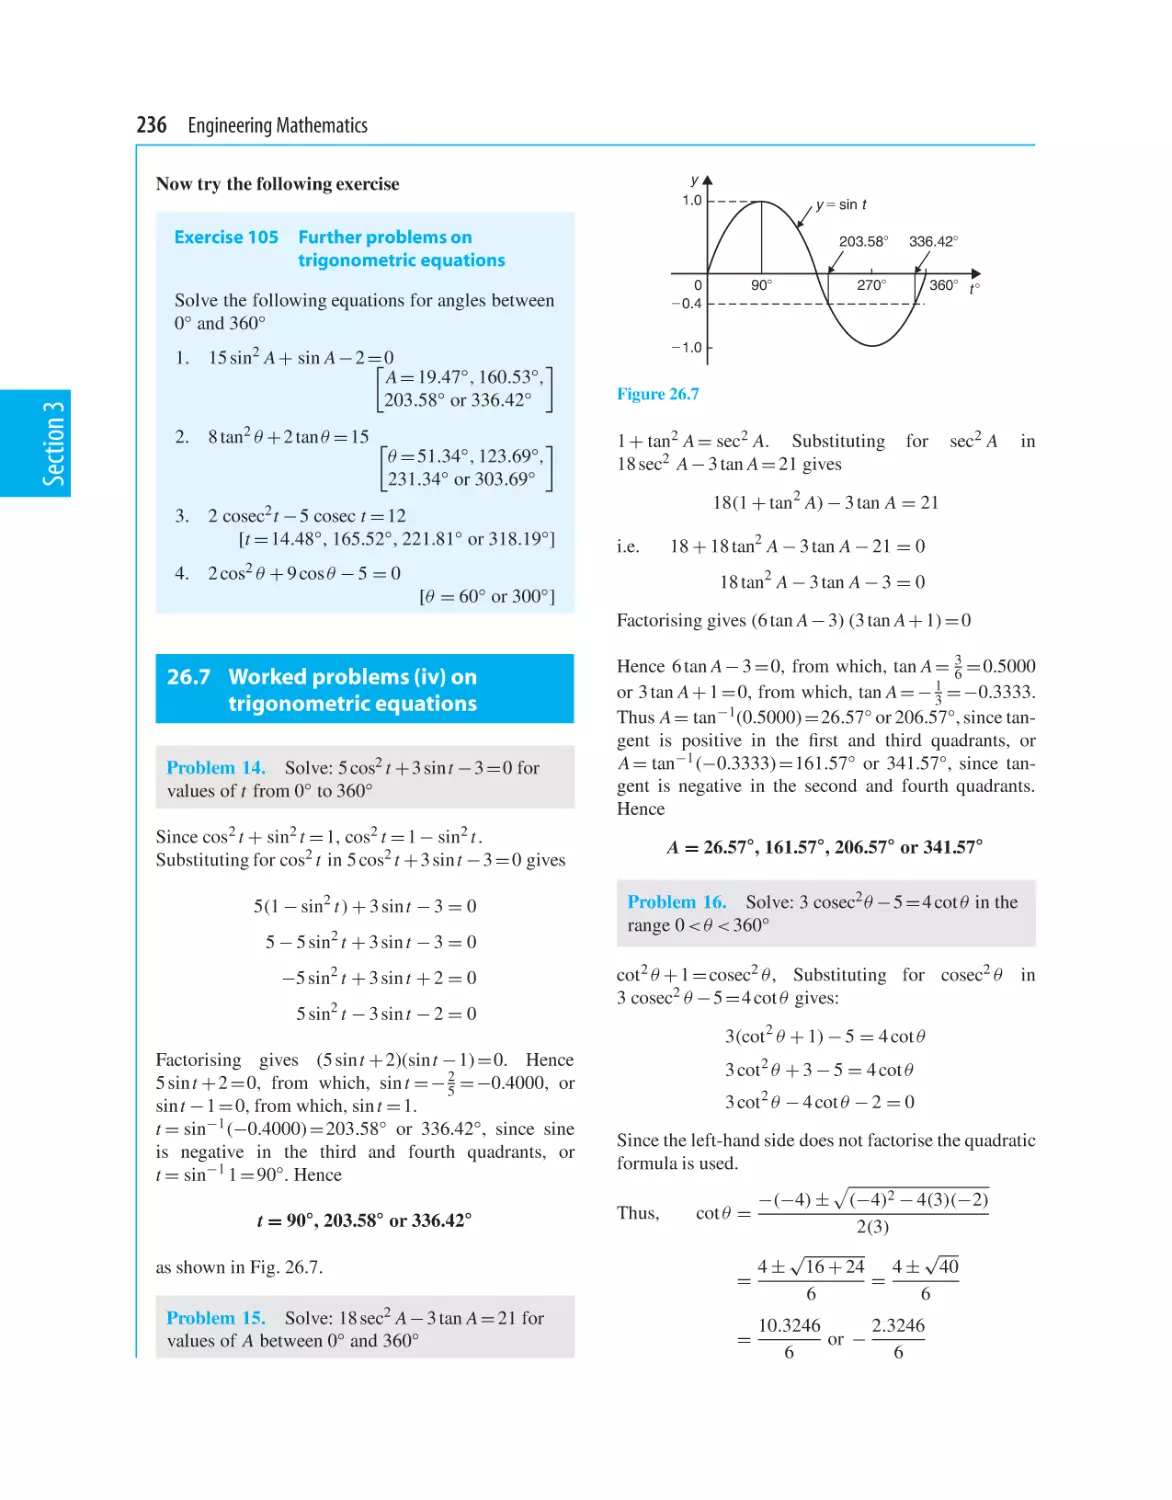 26.7 Worked problems (iv) on trigonometric equations